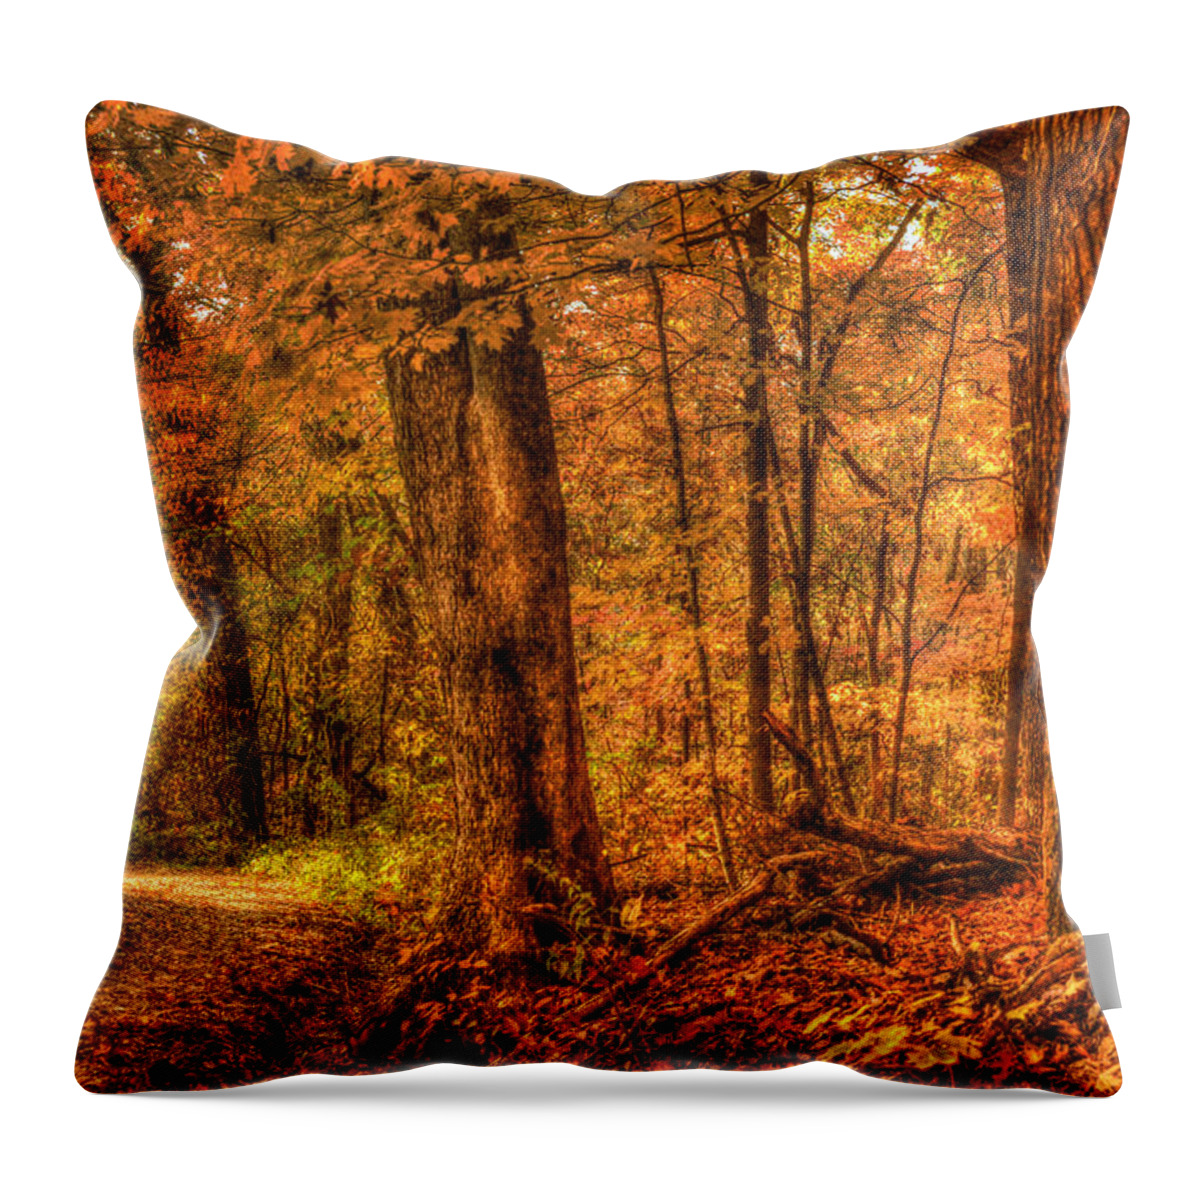 Autumn's Light Throw Pillow featuring the photograph Autumn's Light by William Fields